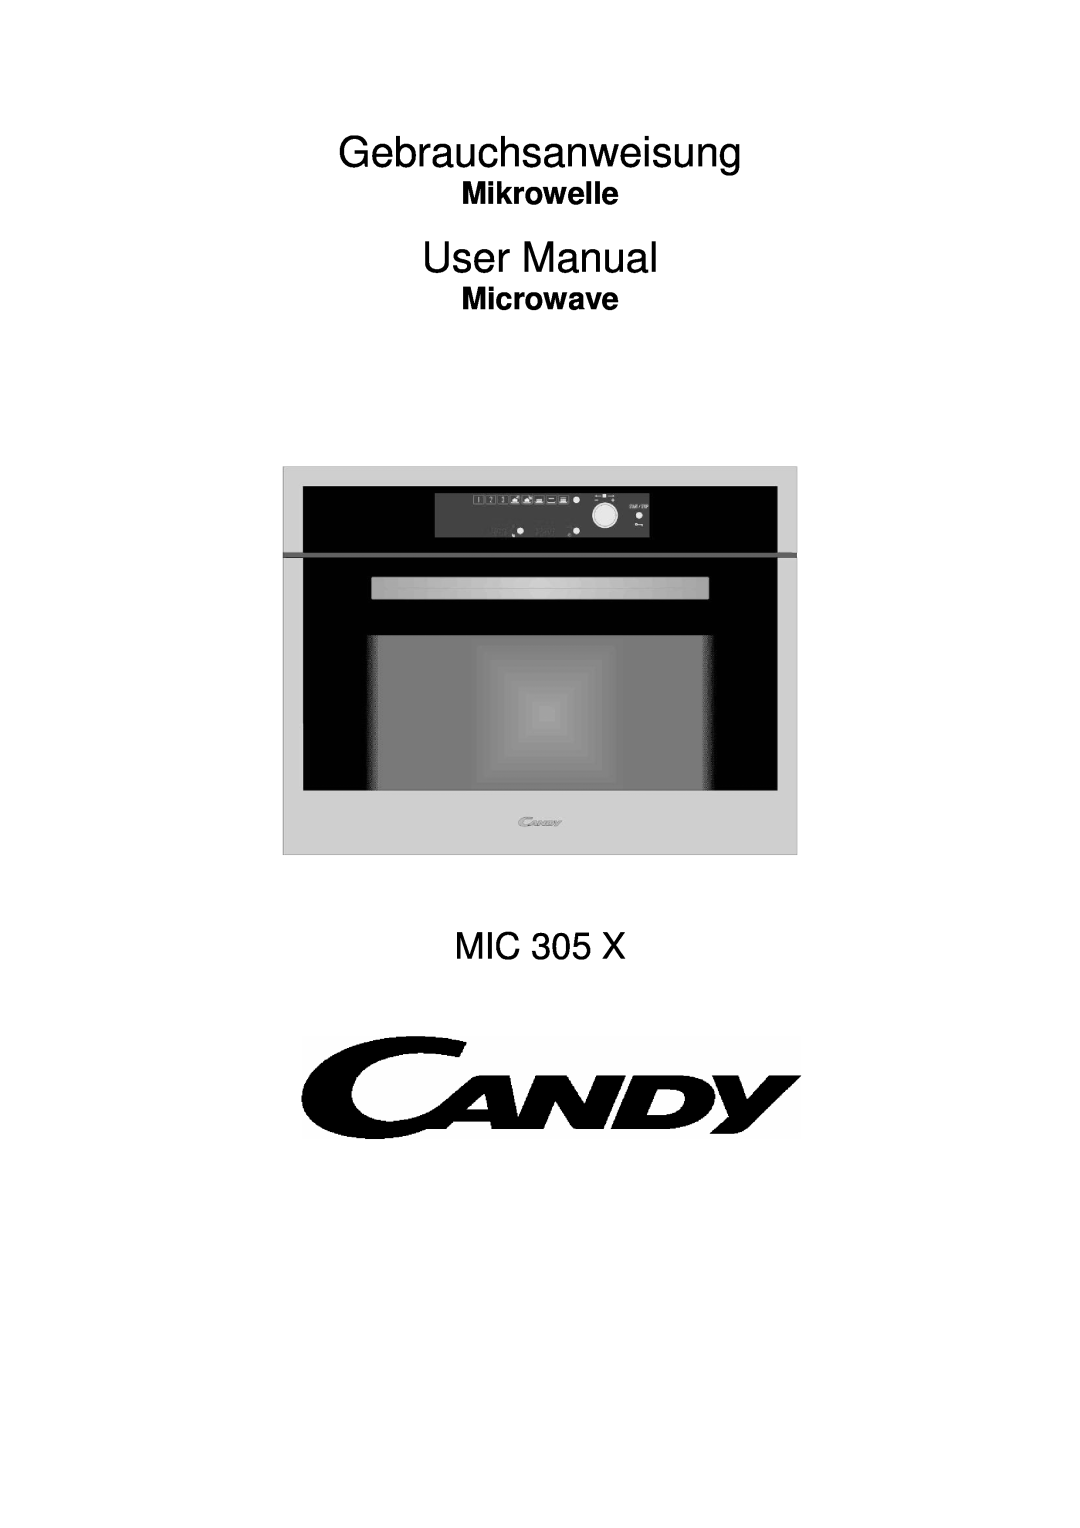 Candy MIC 305 X user manual Gebrauchsanweisung, User Manual, Mikrowelle, Microwave 